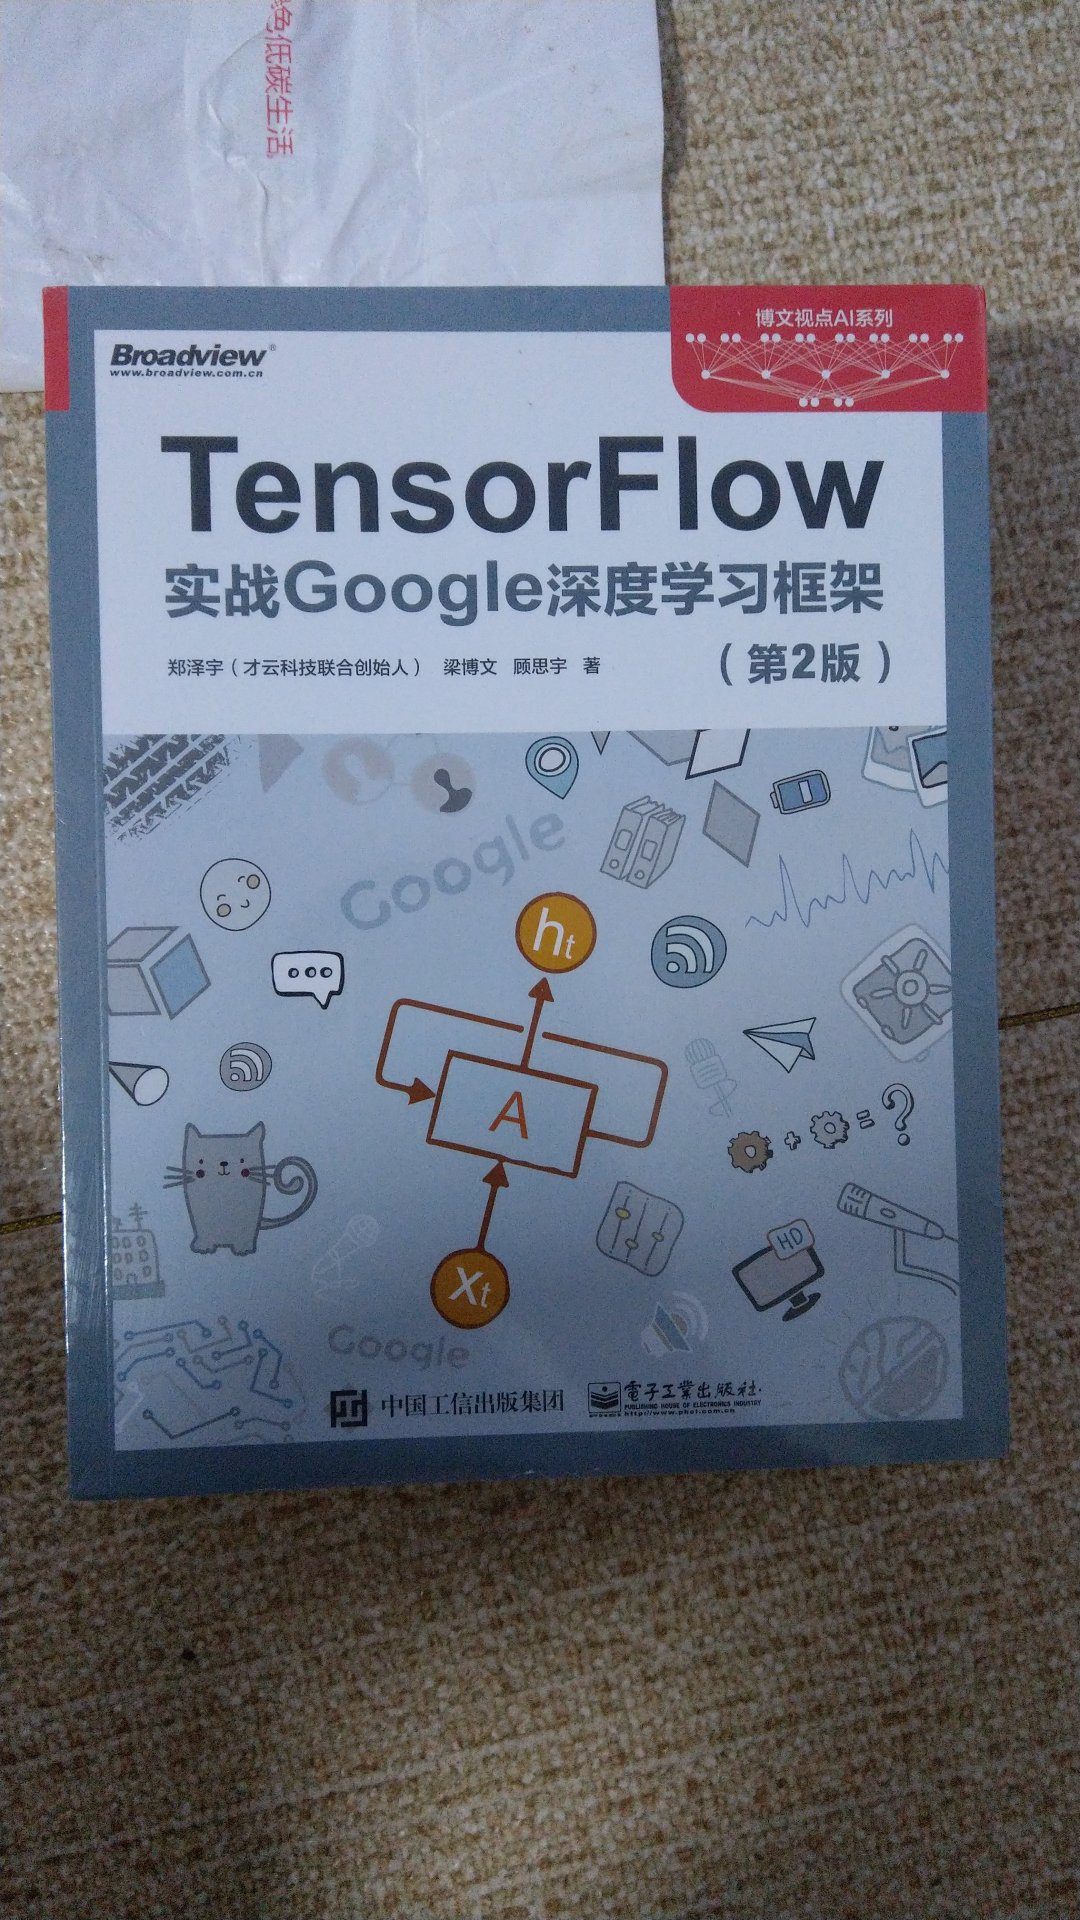 tensorflow已经成为开源深度学习的领军项目，学习深度学习，机器学习，强化学习必须要用